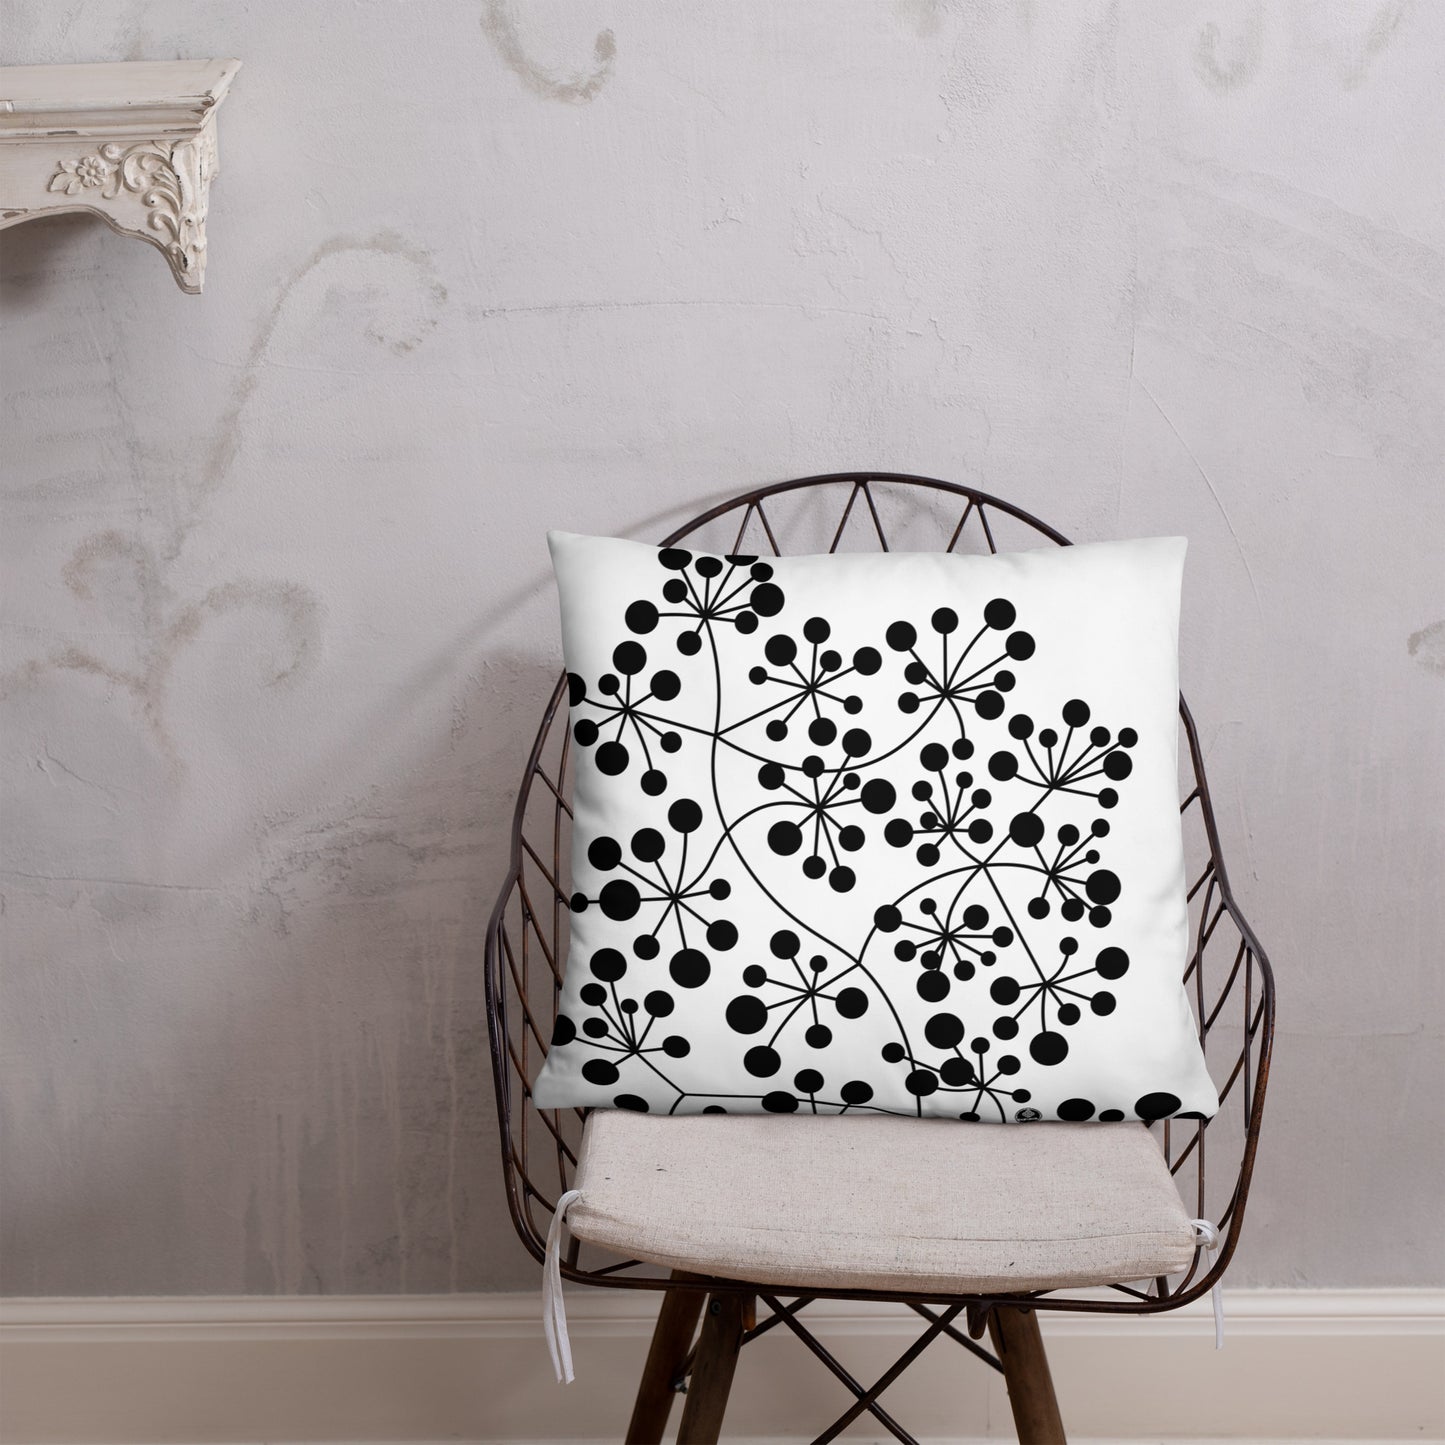 Classic cushion ❯ Arboricool ❯ Black on white